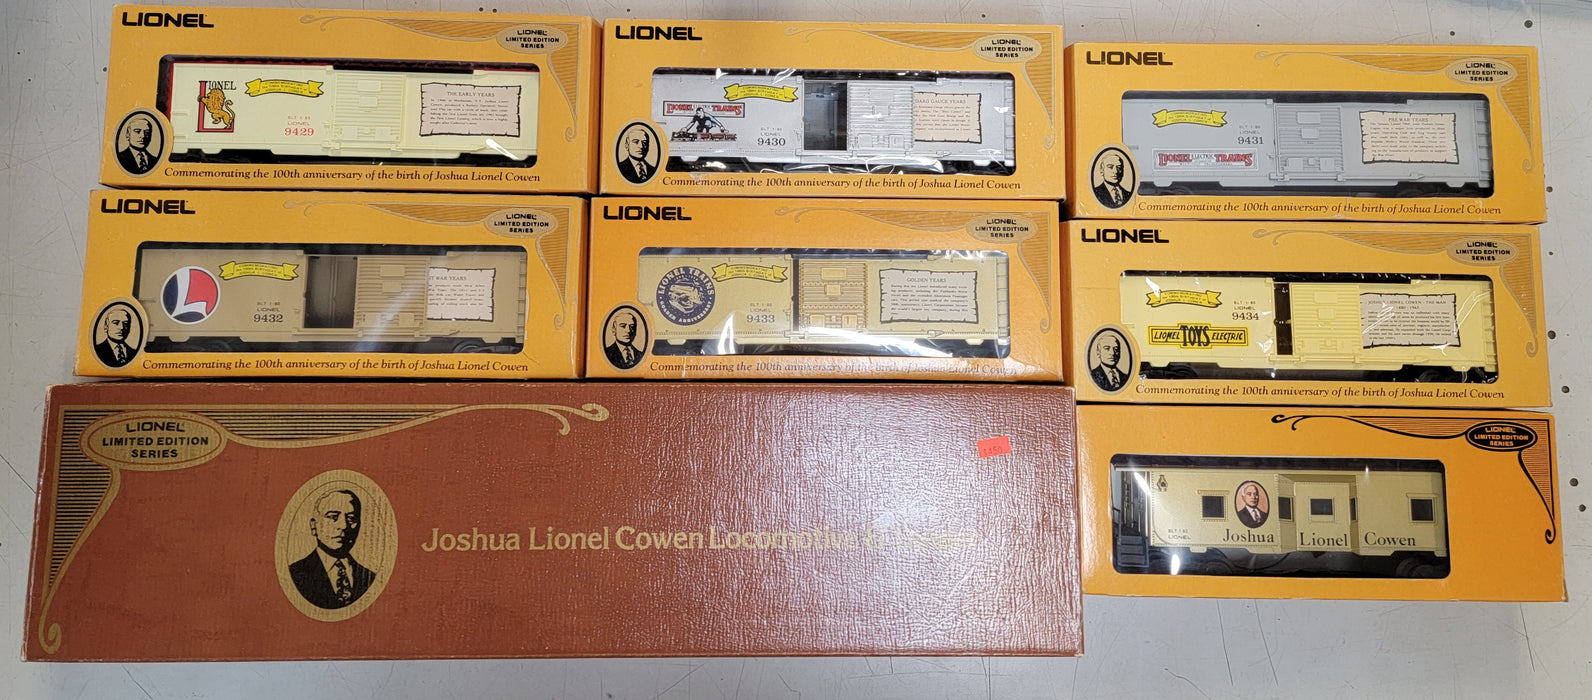 Lionel 6-8210 Joshua Lionel Cowen Steam Engine w/ 6 Boxcar set & Caboose - NOS